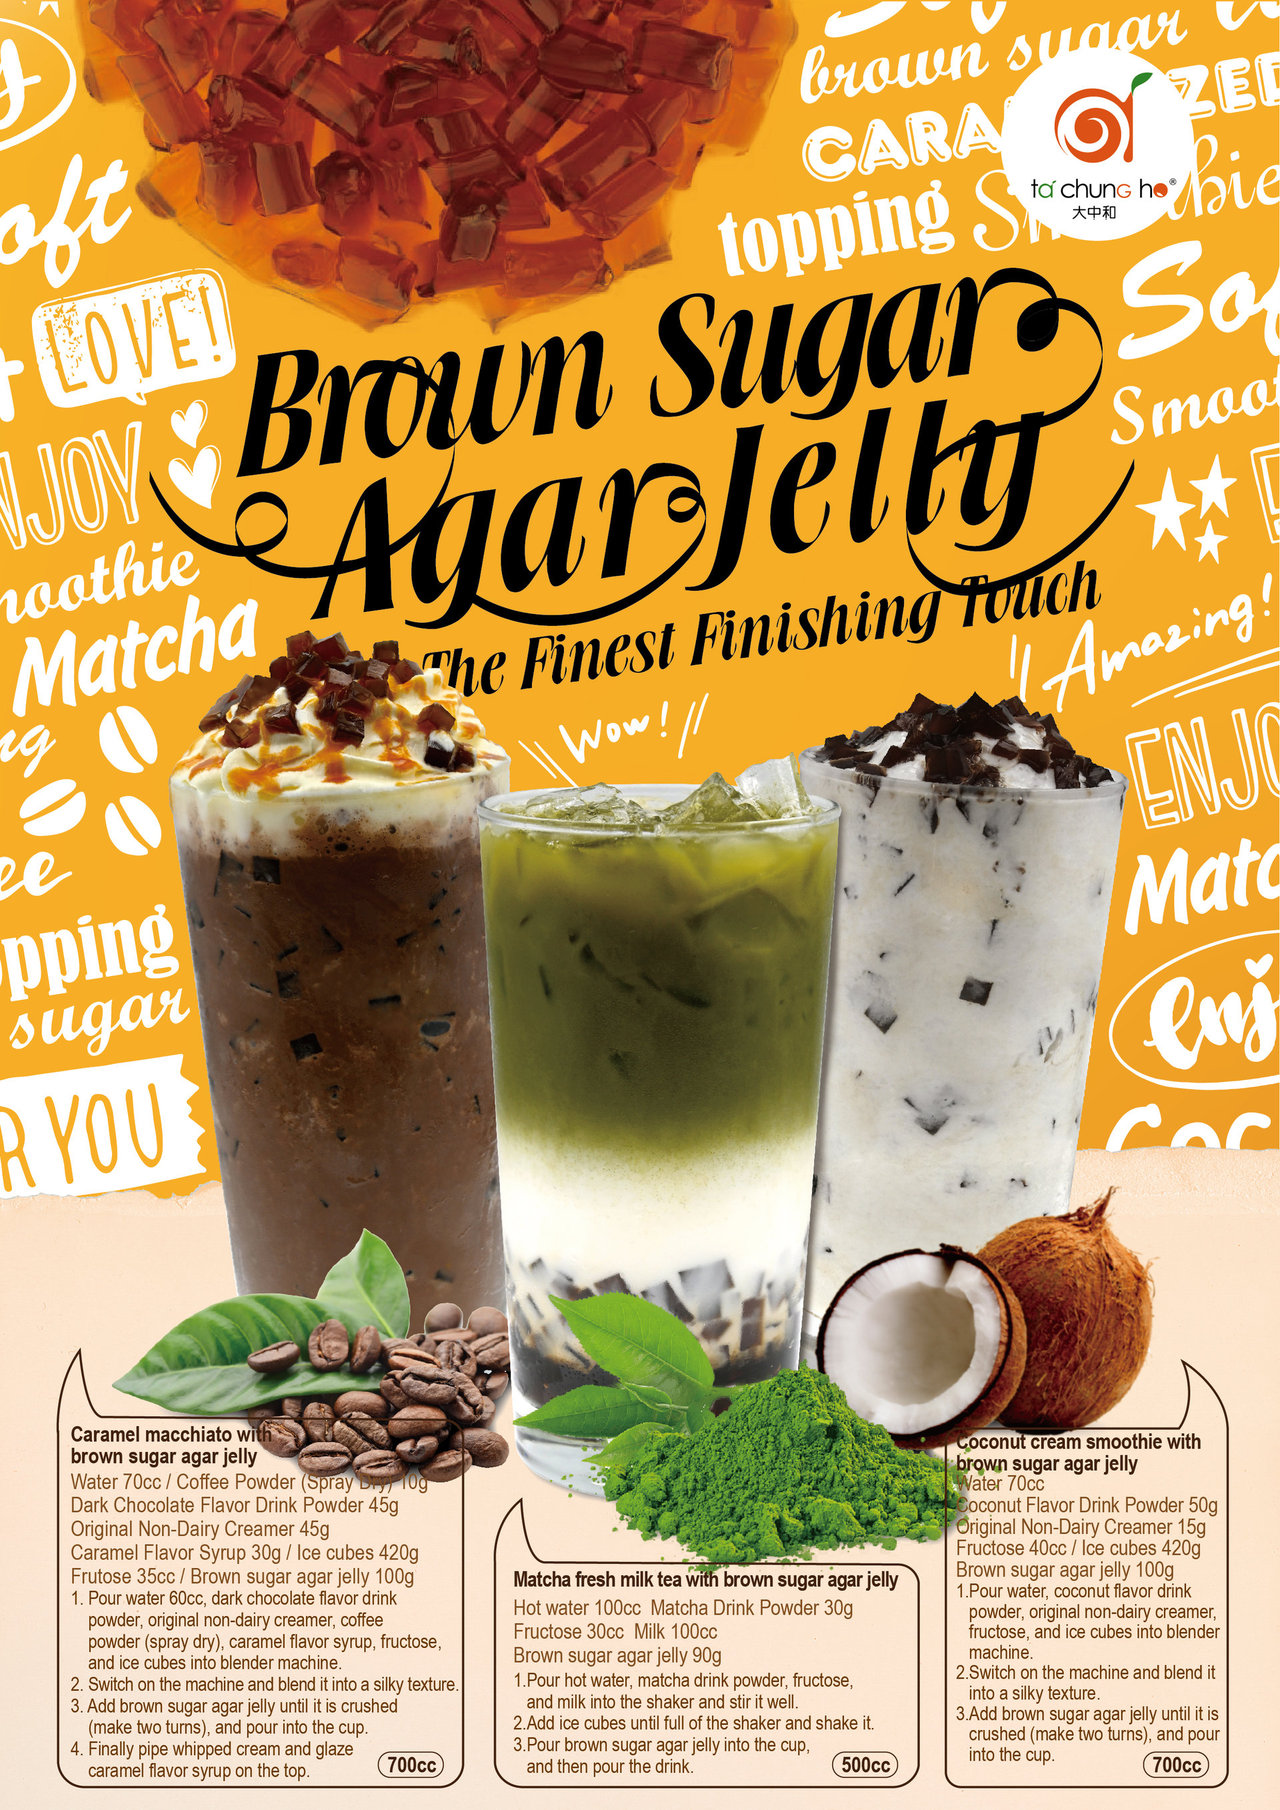 Brown Sugar Agar Jelly：The Finest Finishing Touch - 黑糖,珍奶專家,珍珠奶茶,手搖飲料,飲料,珍珠奶茶原物料珍珠奶茶原物料供應商
,bubbletea,boba,tapiocapearls,milktea,pearlmilktea